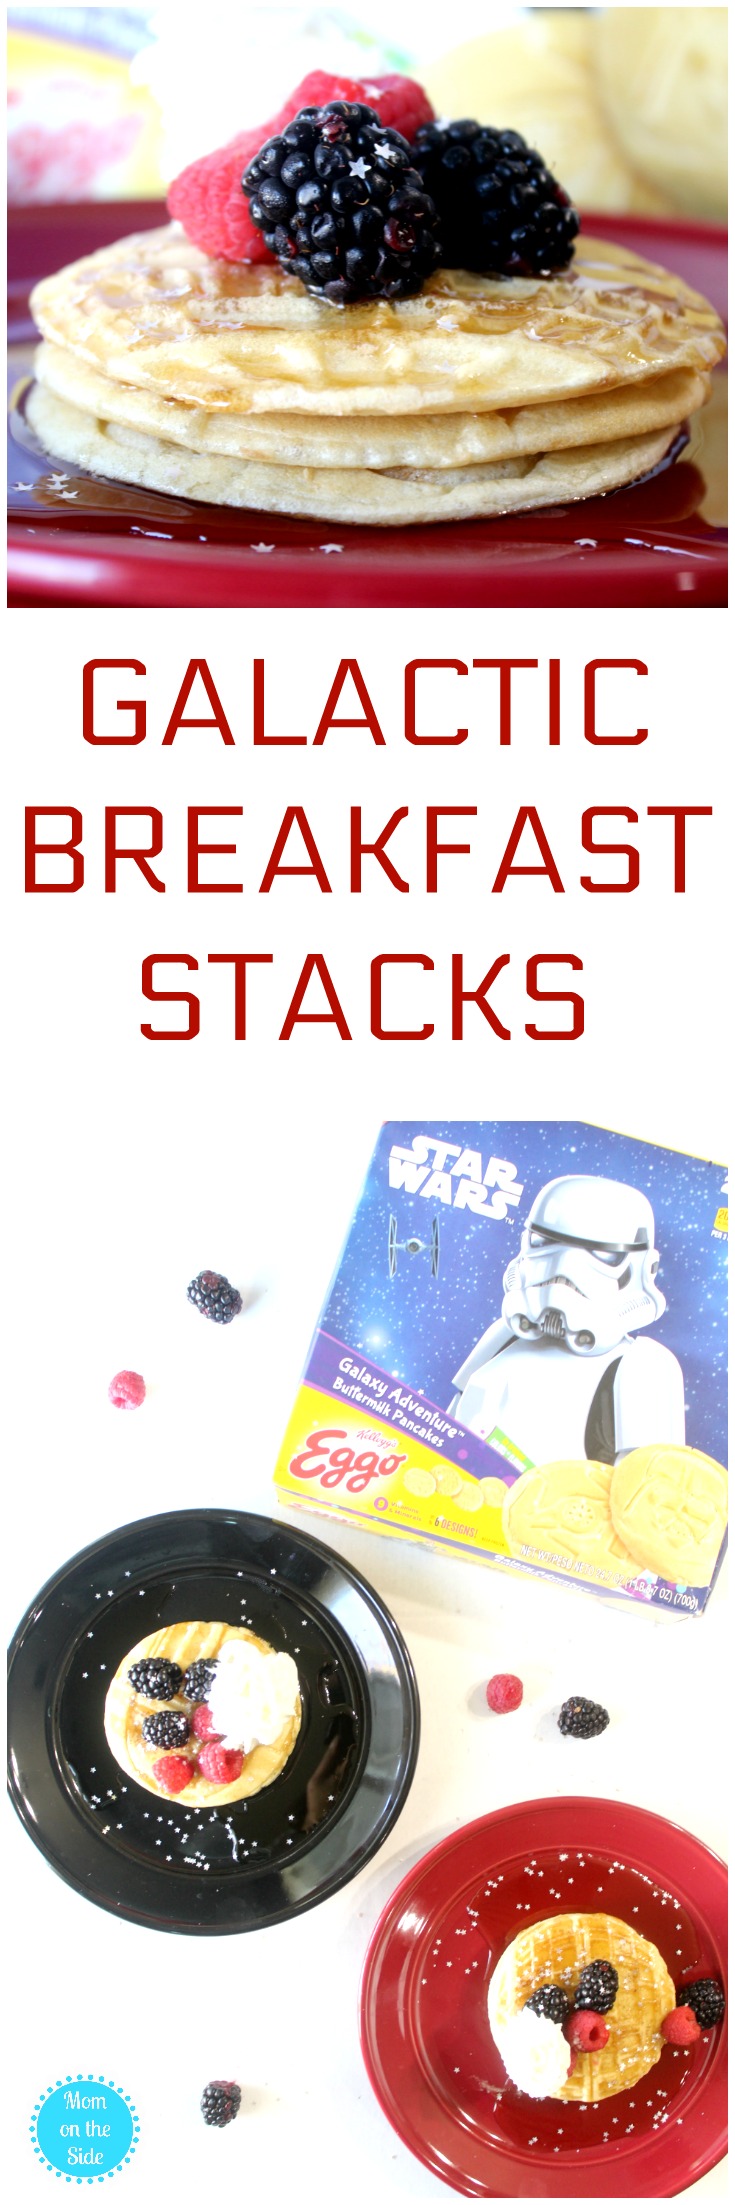 Making Galactic Breakfast Stacks with Eggo Star Wars Buttermilk Pancakes at Walmart